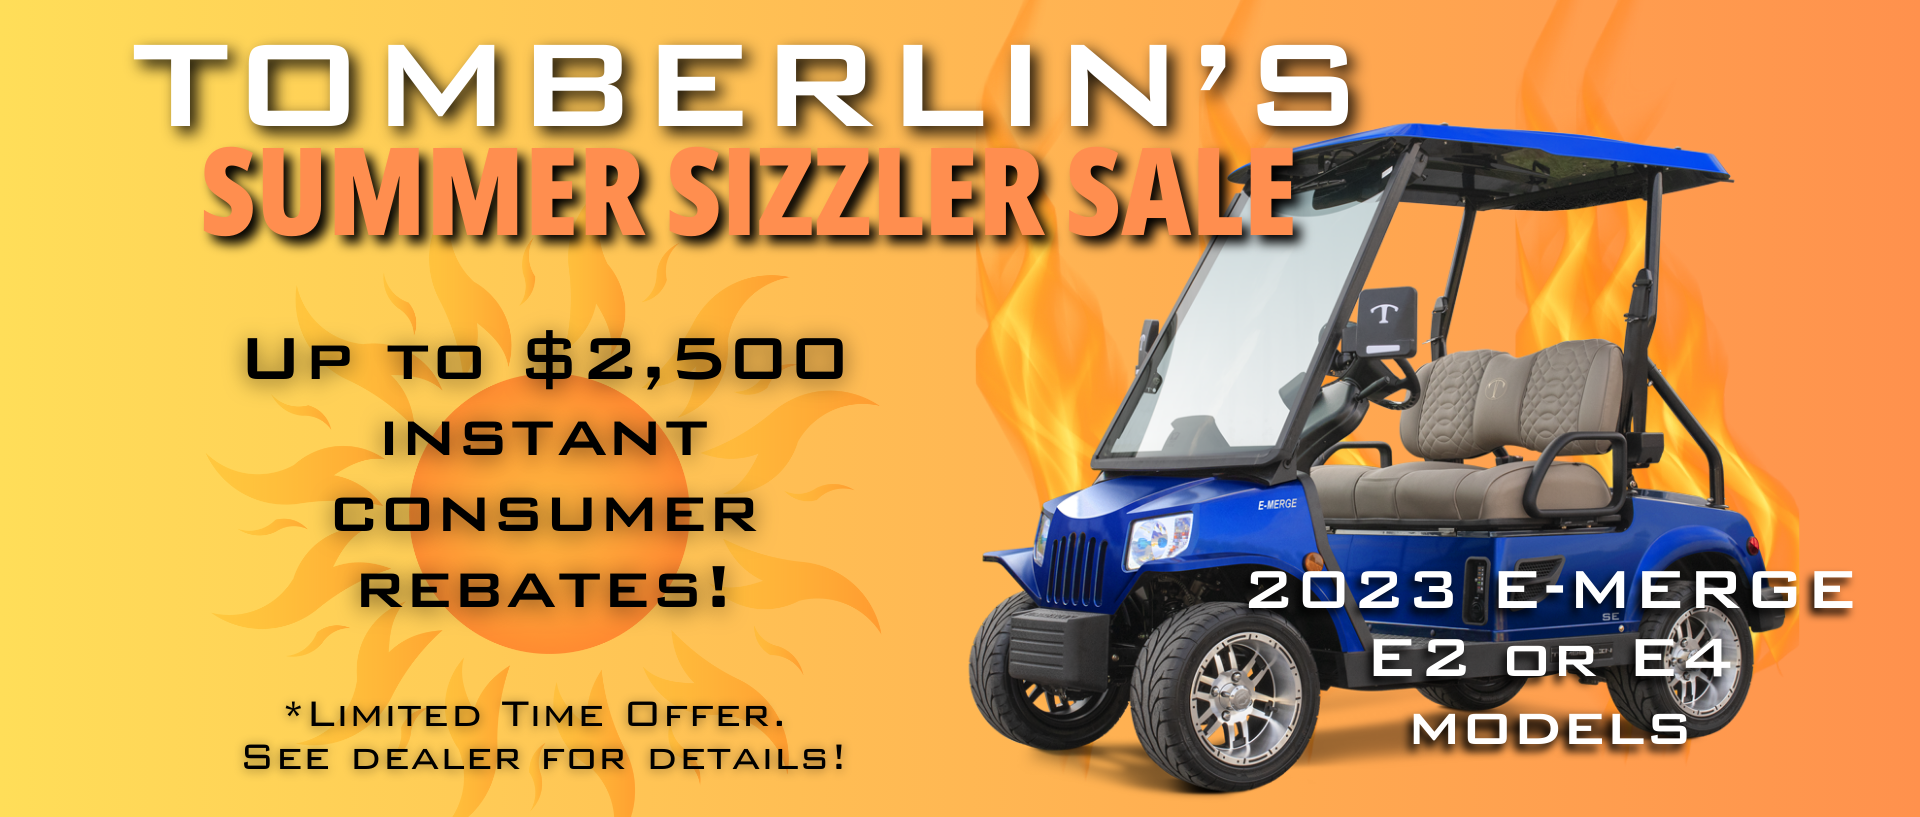 Summer Sizzler Sale EMerge